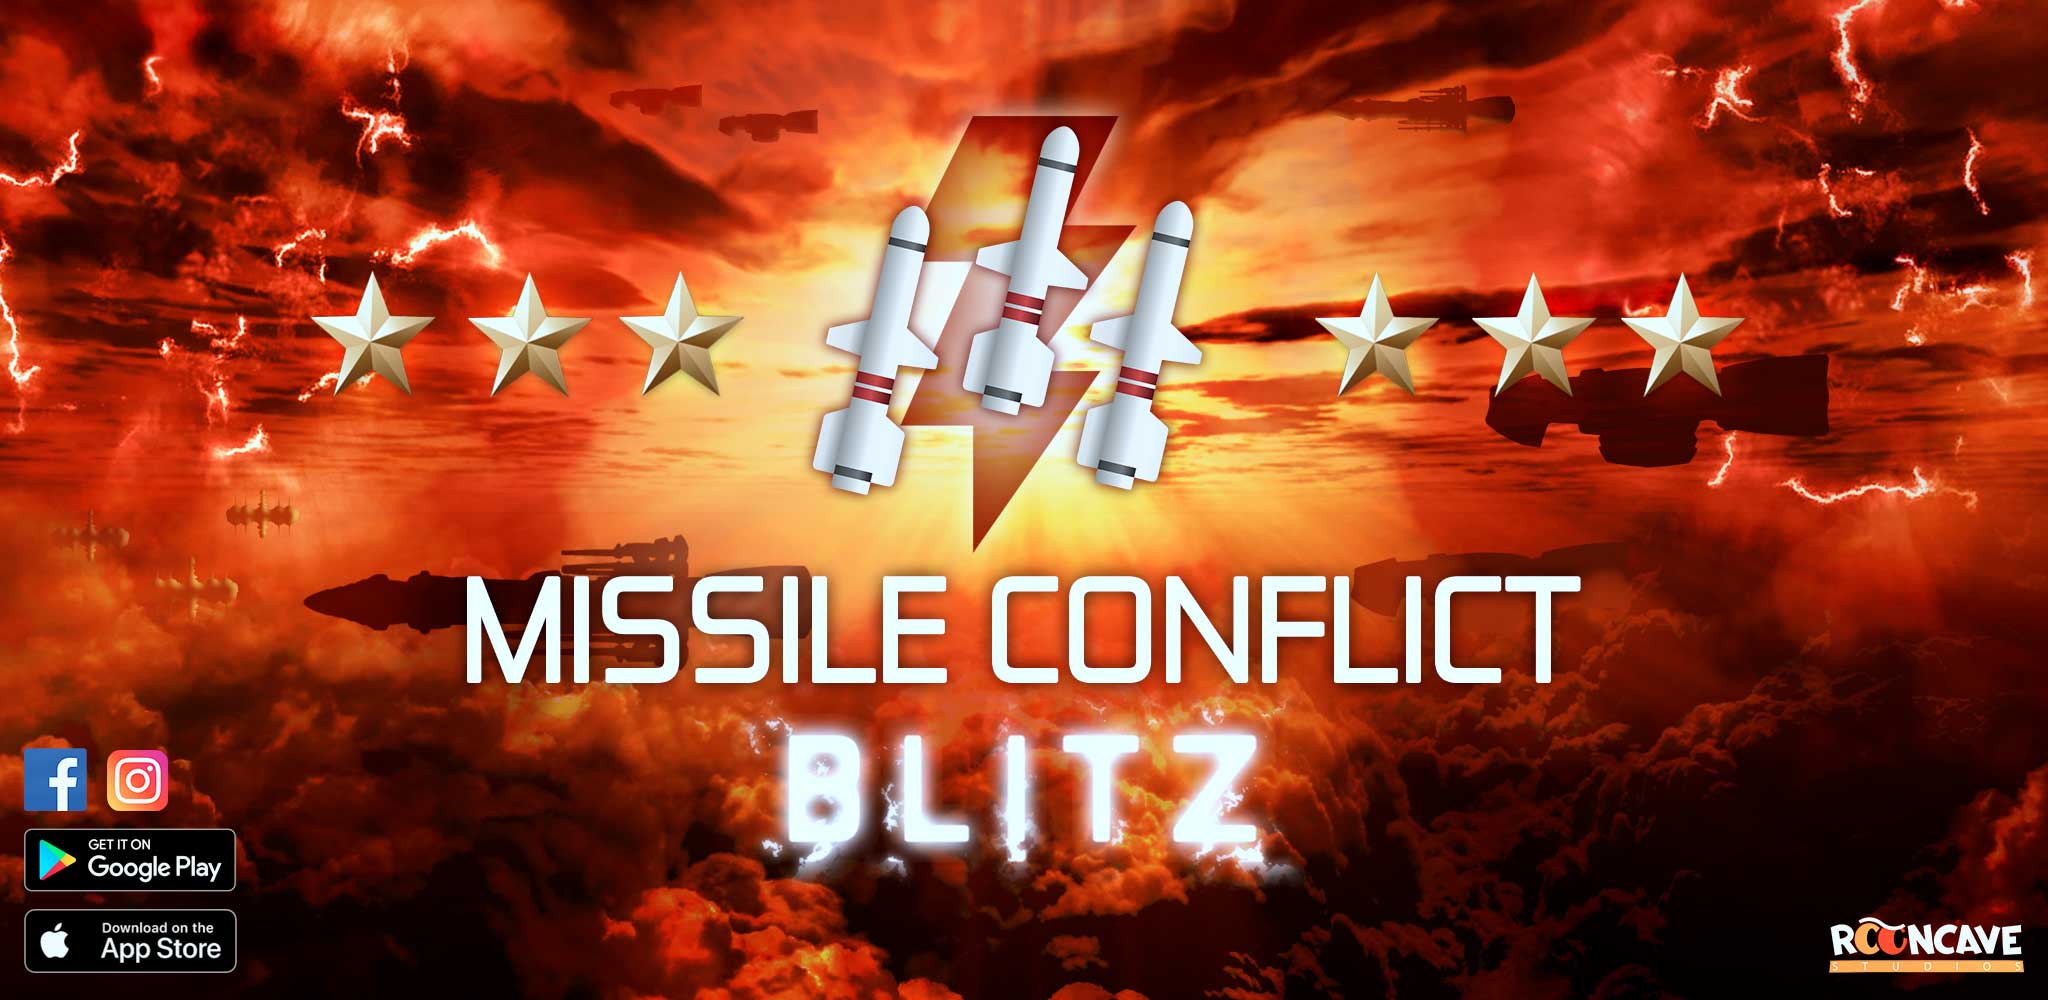 Missile Conflict BLITZ